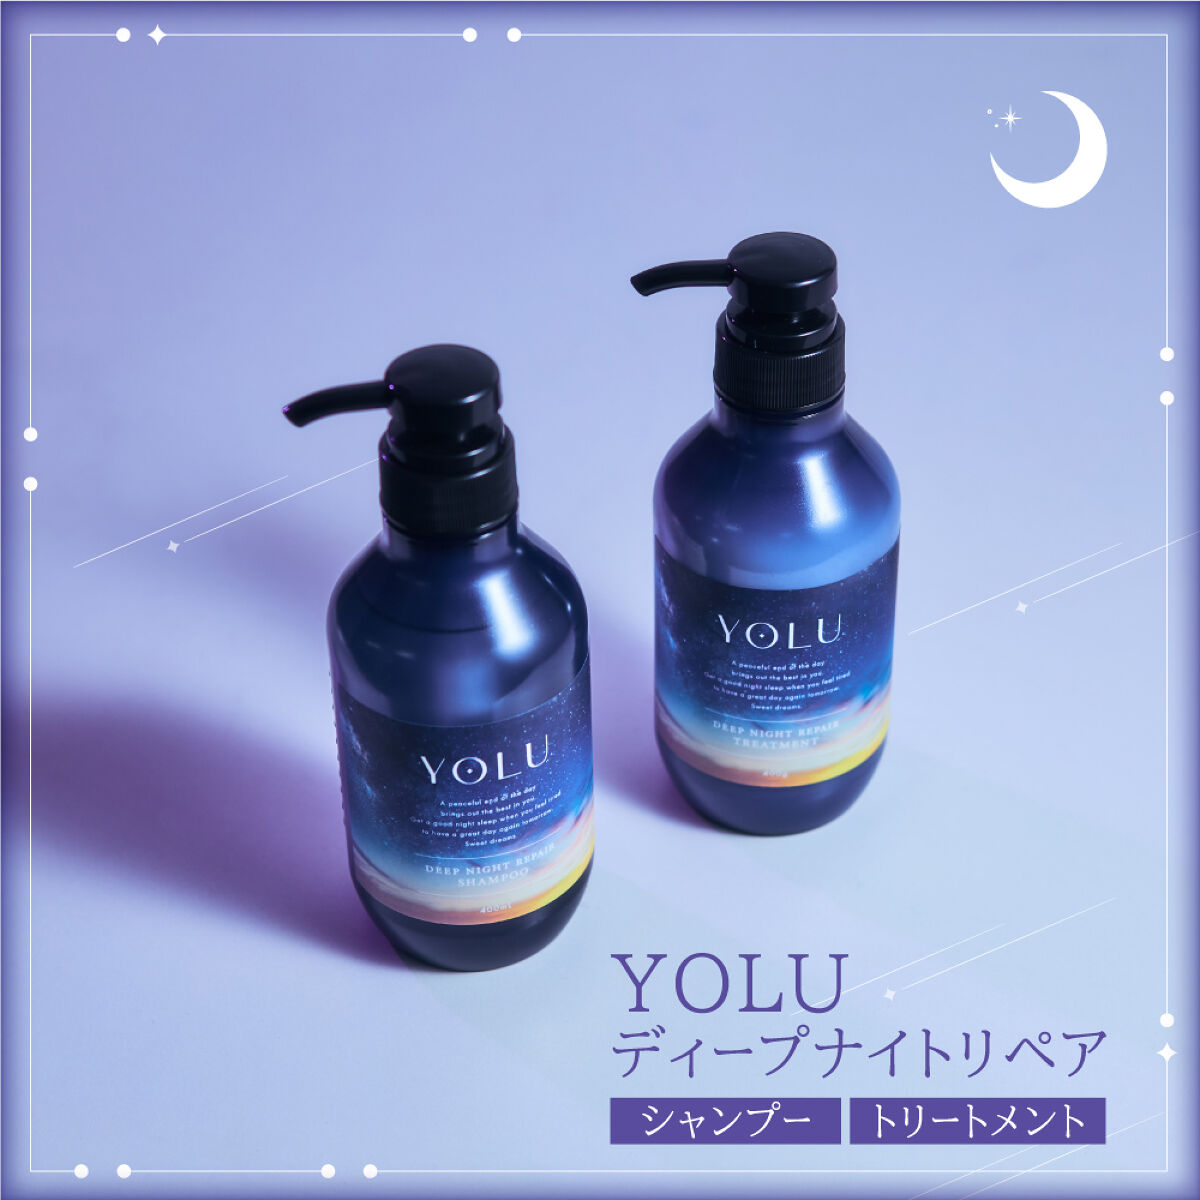 【YOLU】新作がデビュー。傷んだ髪も「生コラーゲン(*1)」で"ぷるツヤ"にの画像